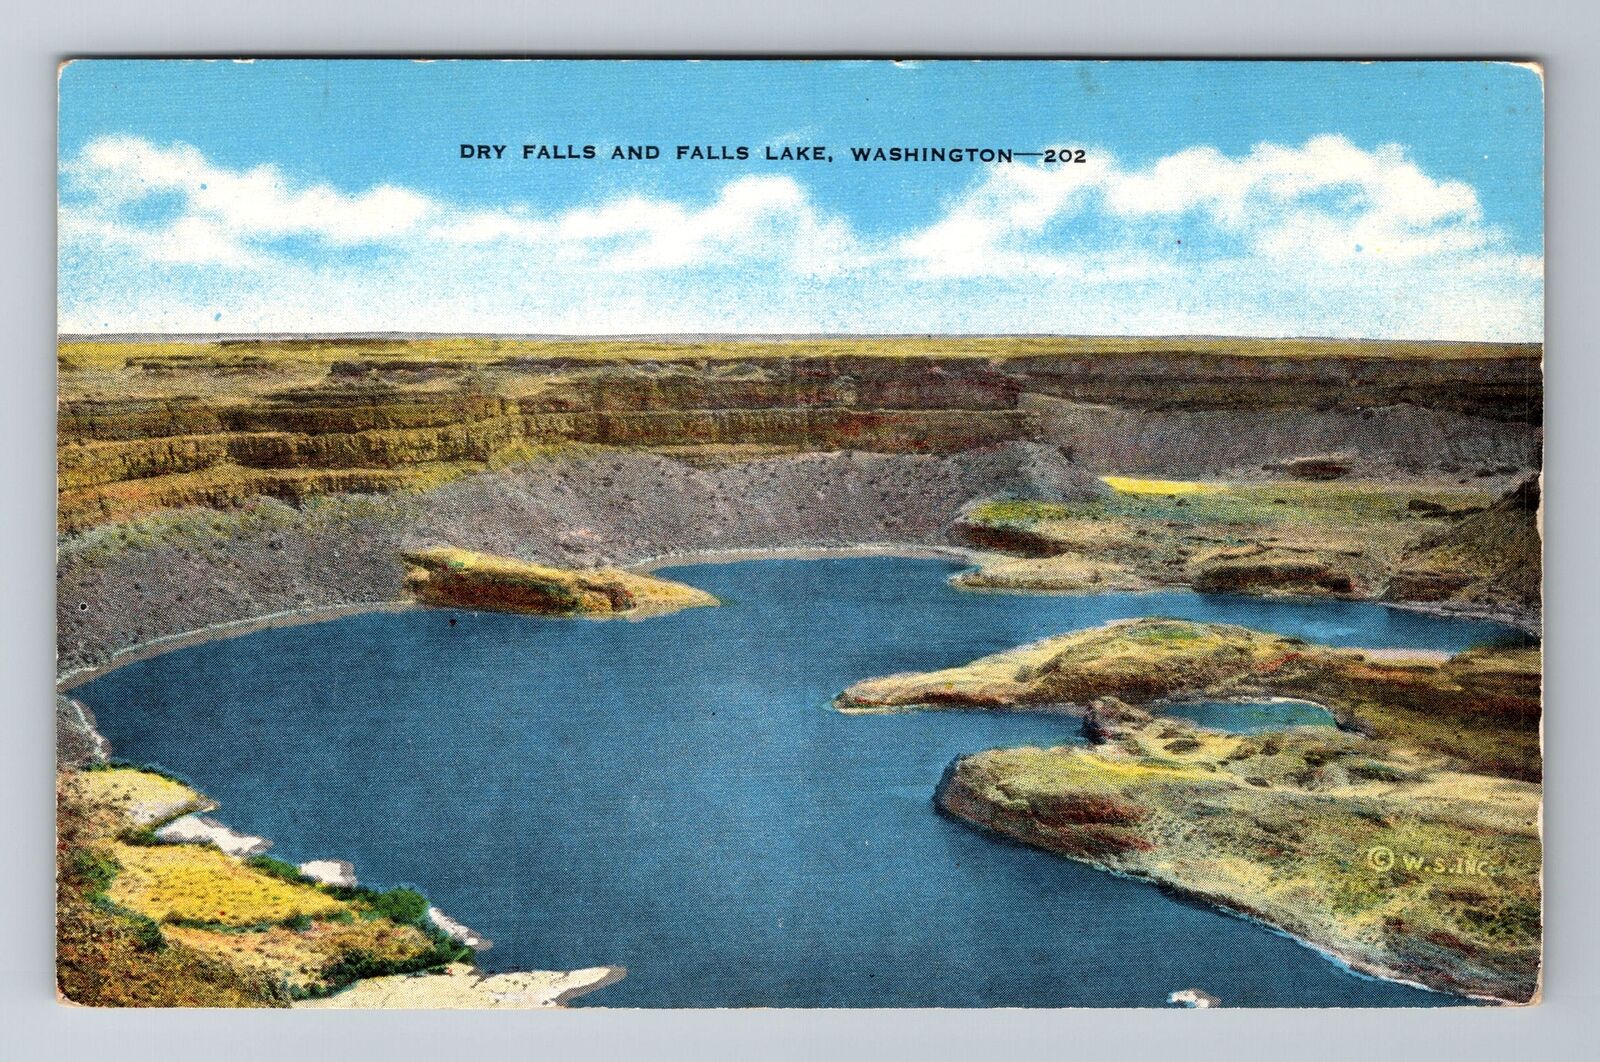 WA-Washington, Dry Falls And Falls Lake, Aerial, Antique, Vintage Postcard